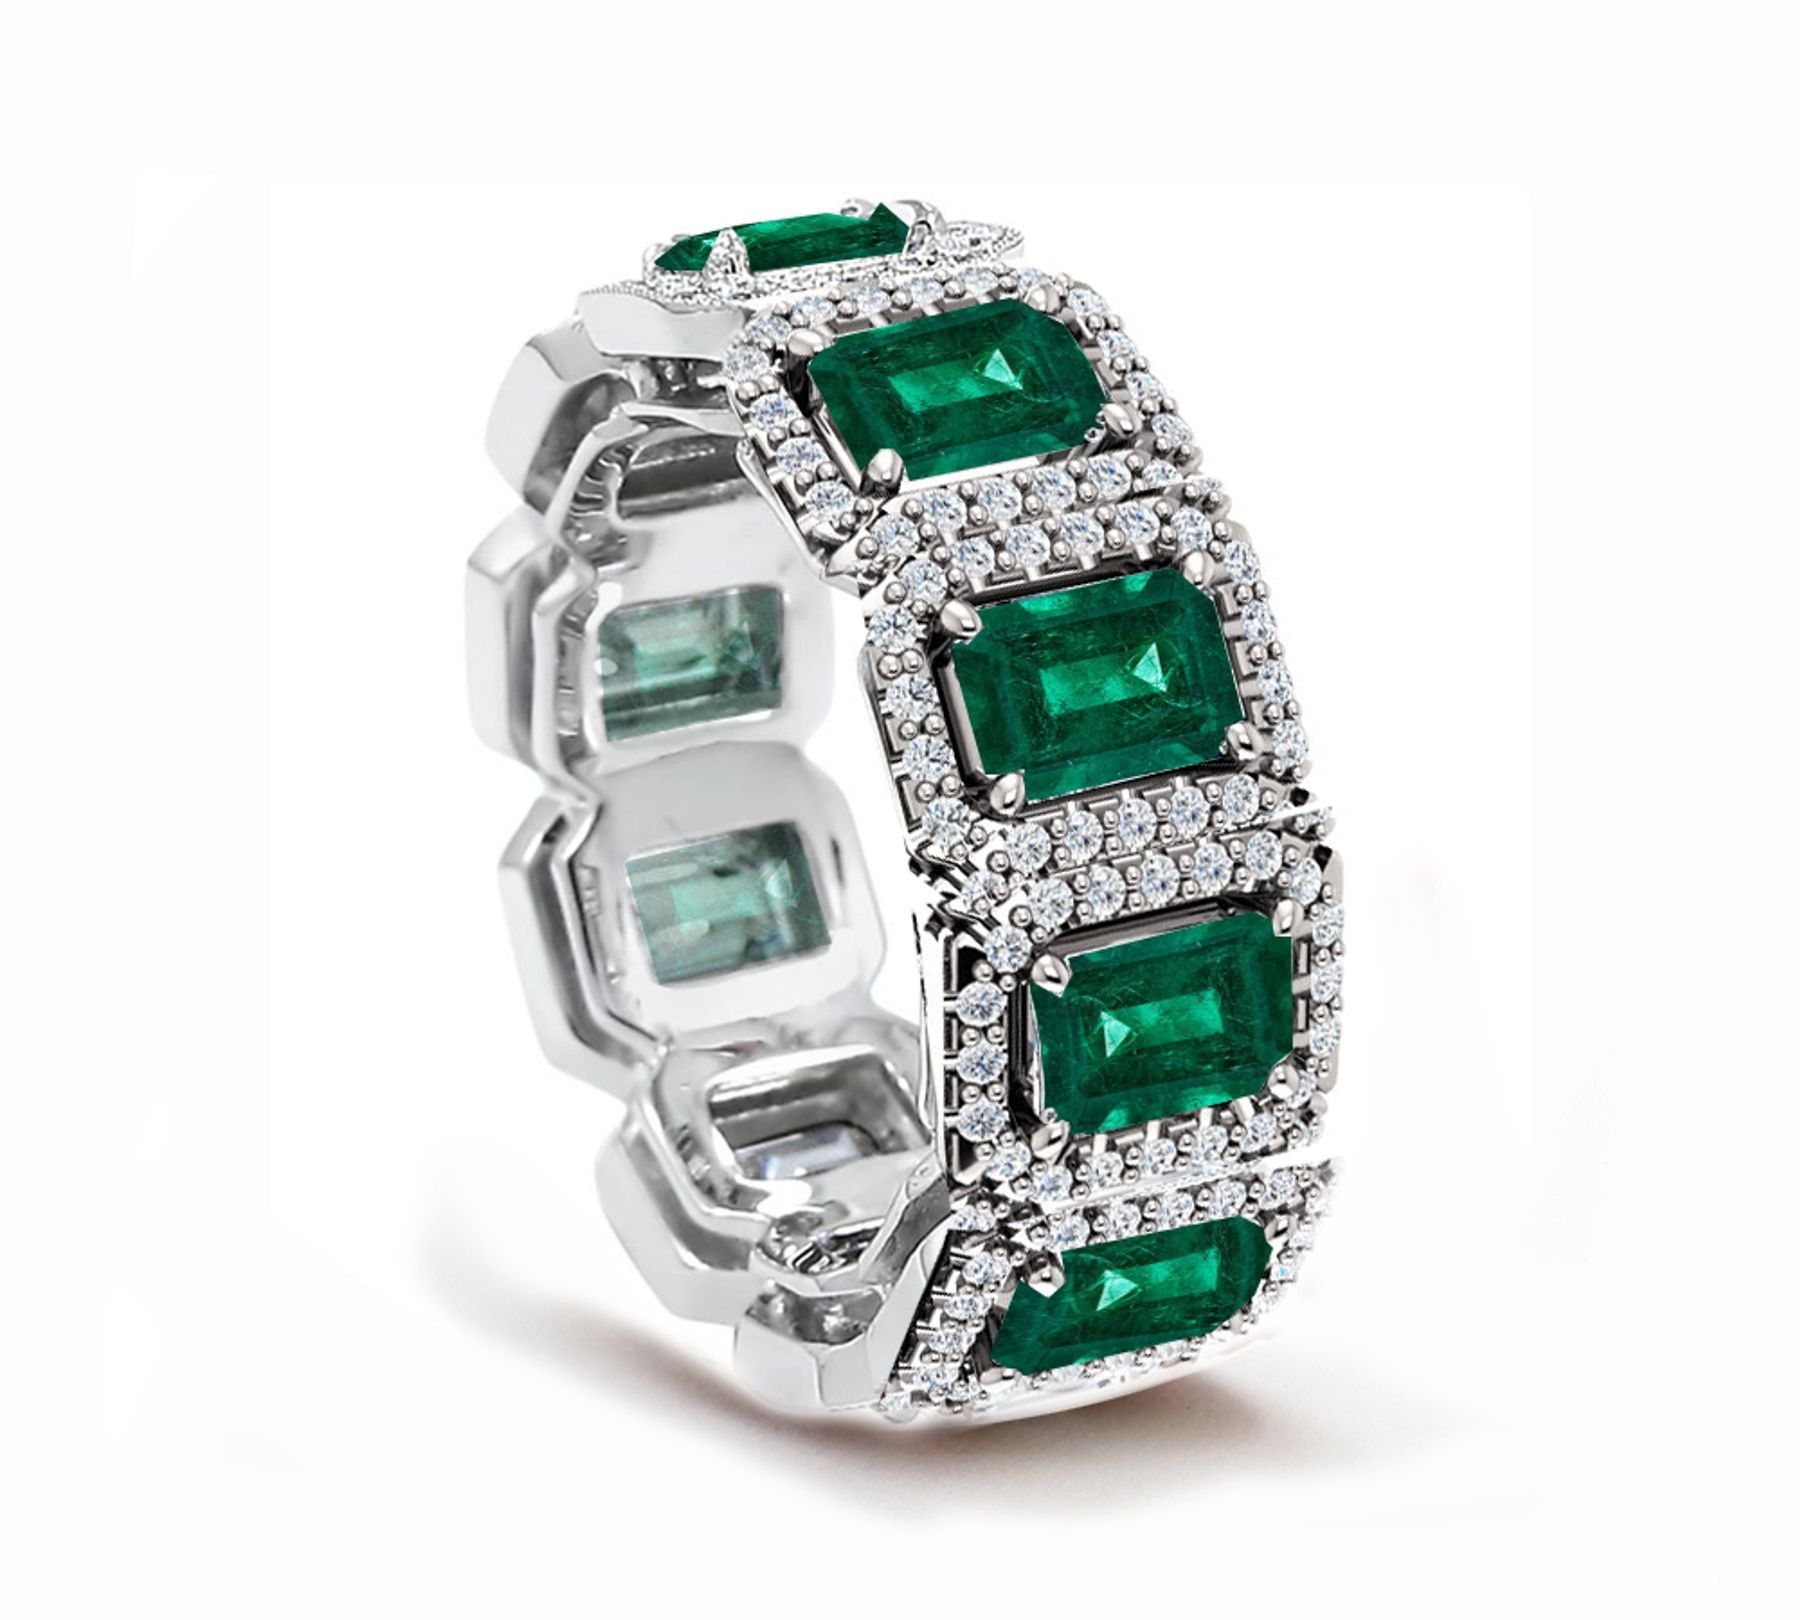 Buy High Quality Custom Manufactured Emerald Cut Halo Micro Diamond Eternity Wedding & Anniversary Bands